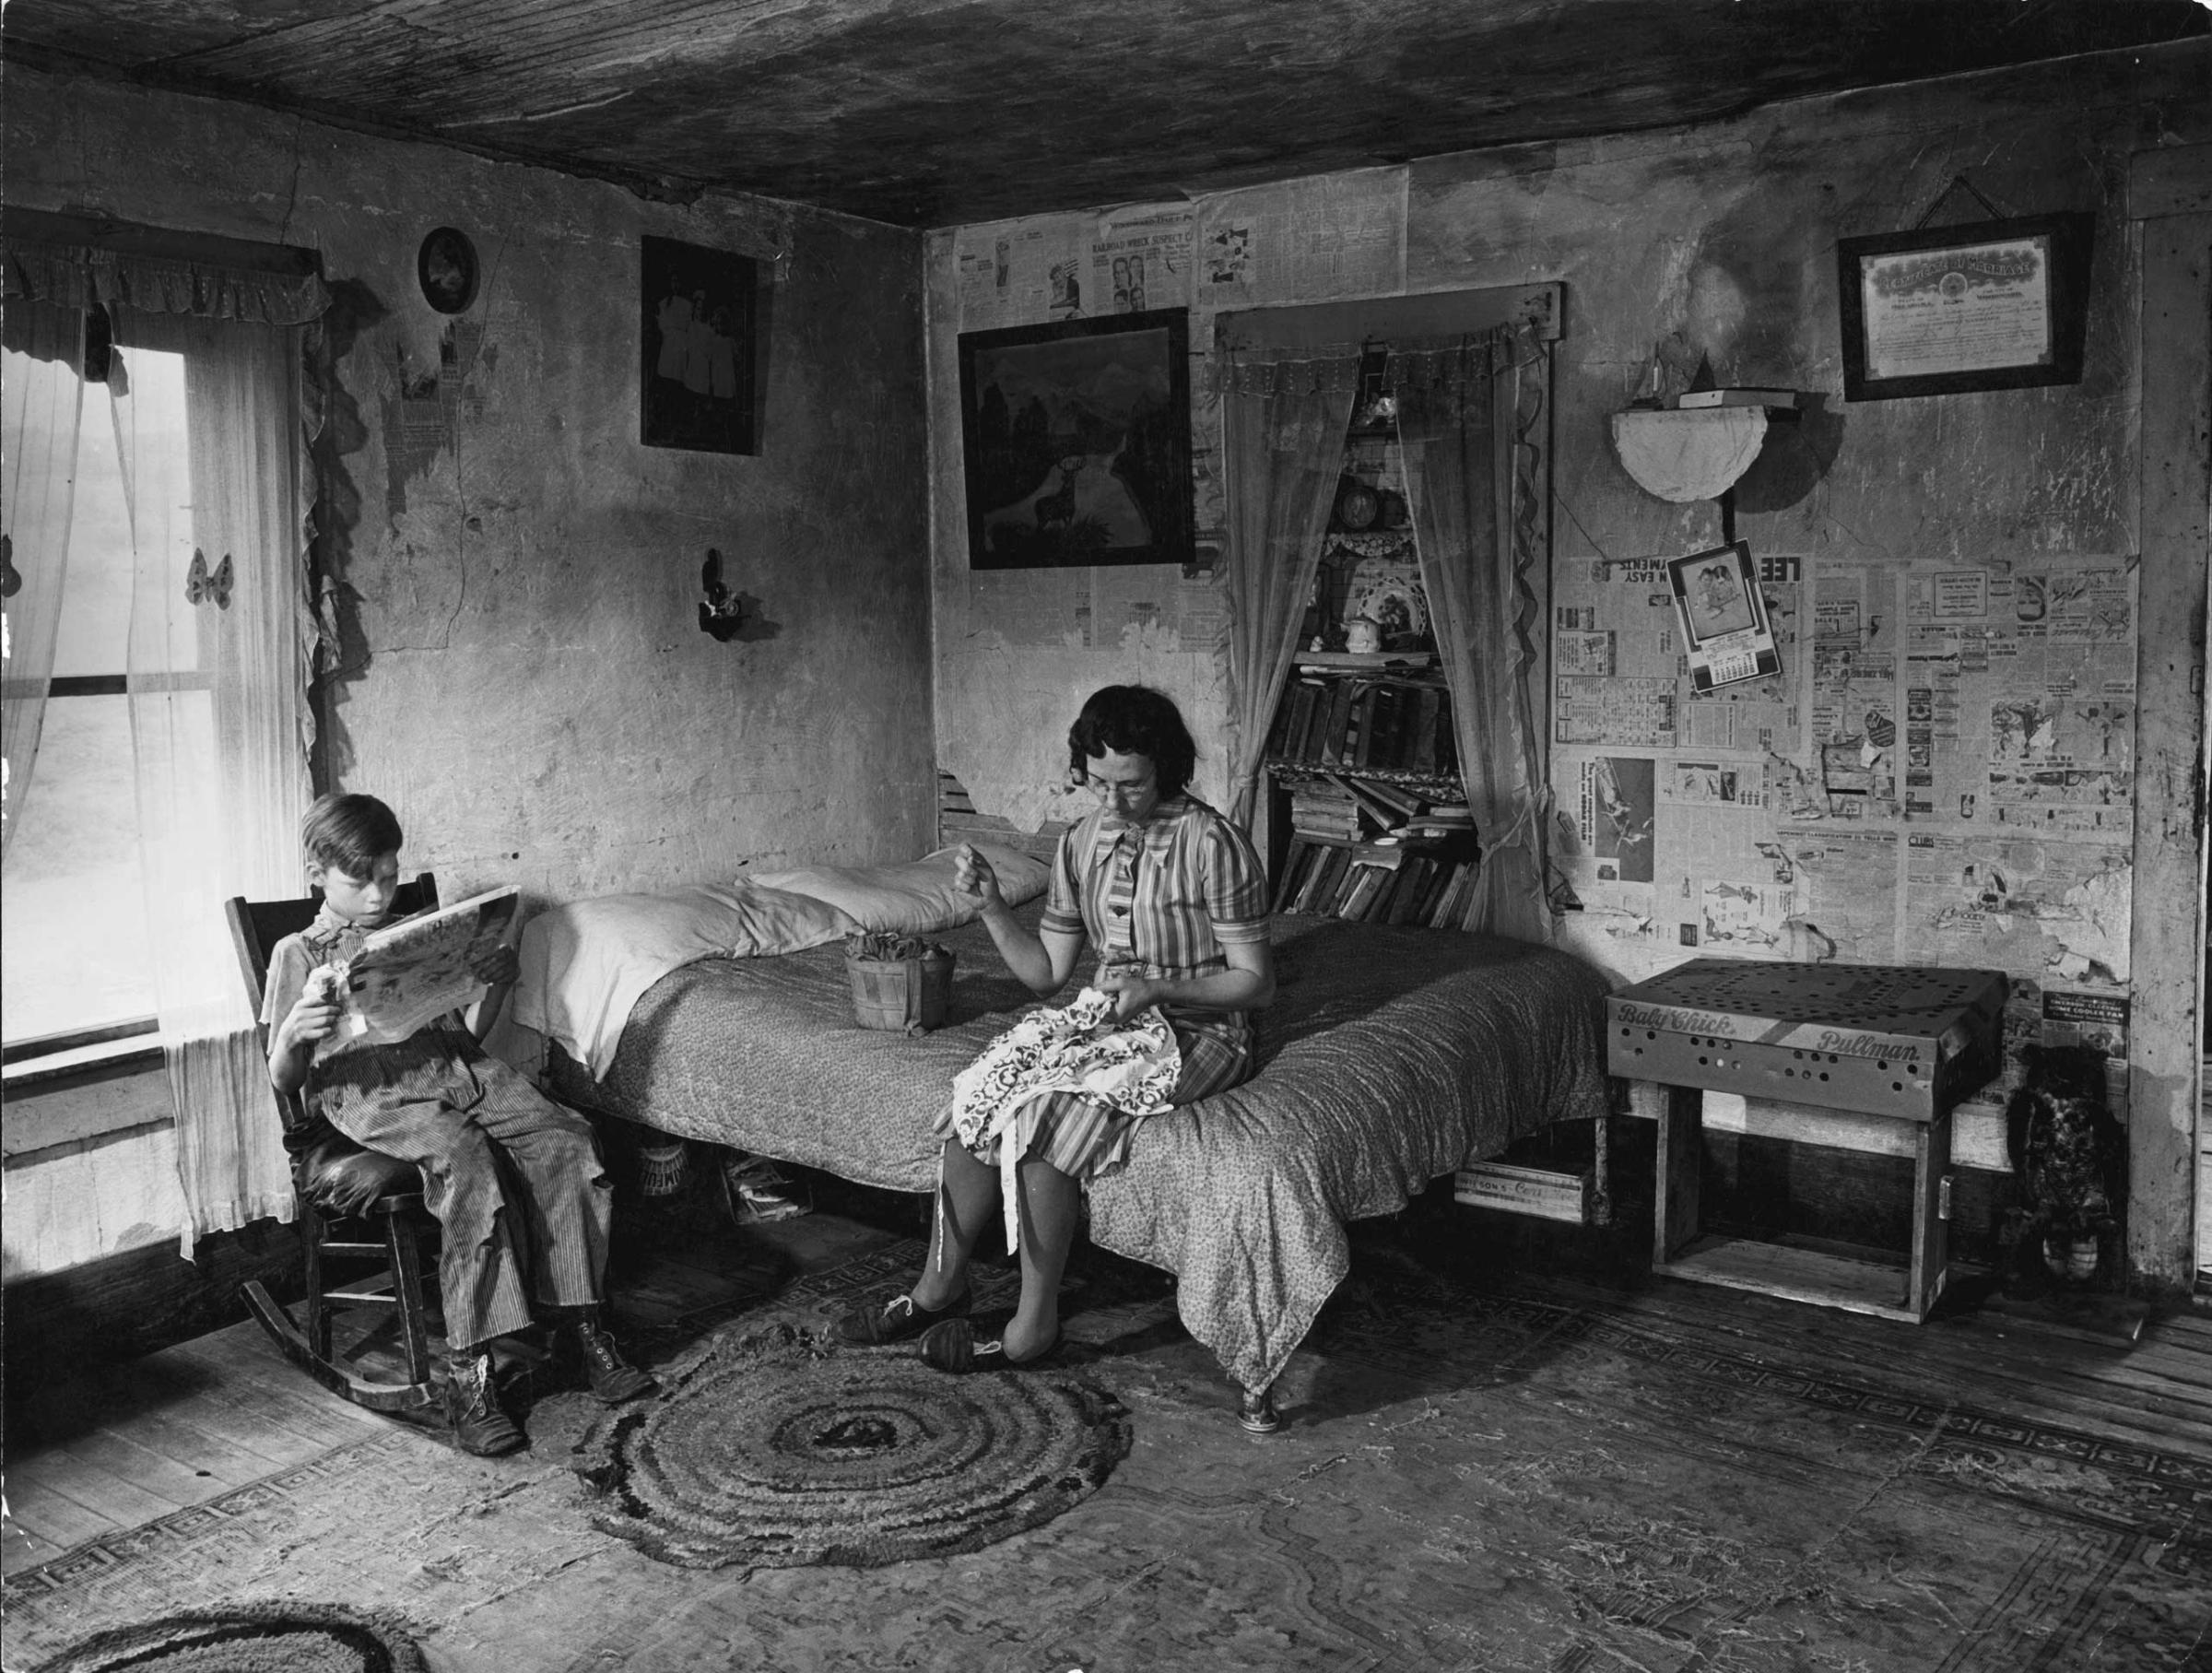 Mrs. Venus Barnett and son Lincoln in room of their farmhouse, Oklahoma, 1942.